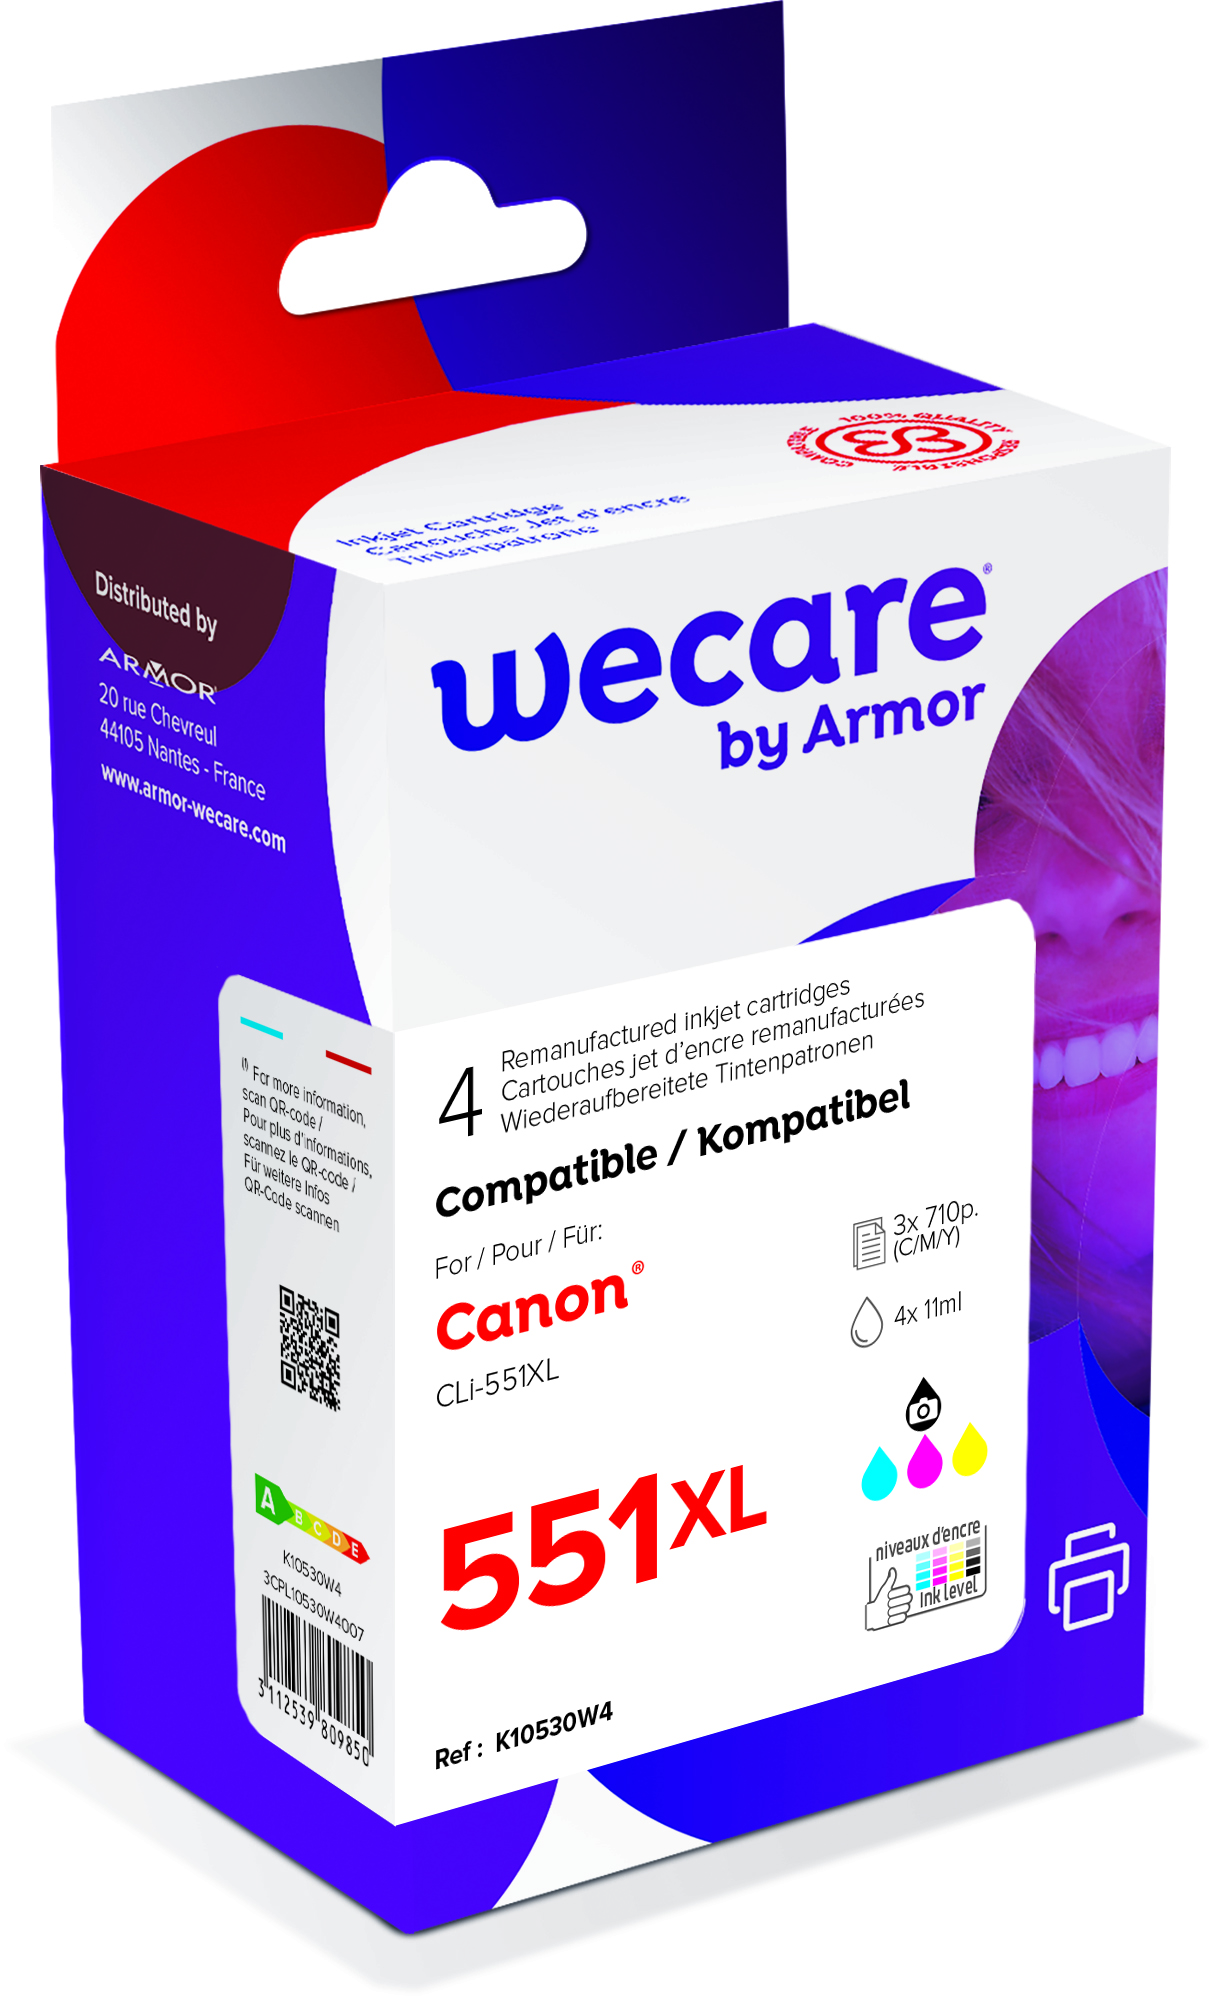 Cartouche compatible Canon CLI-551XL/PGI-550XL - pack de 4 - noir, cyan, magenta, jaune - ink